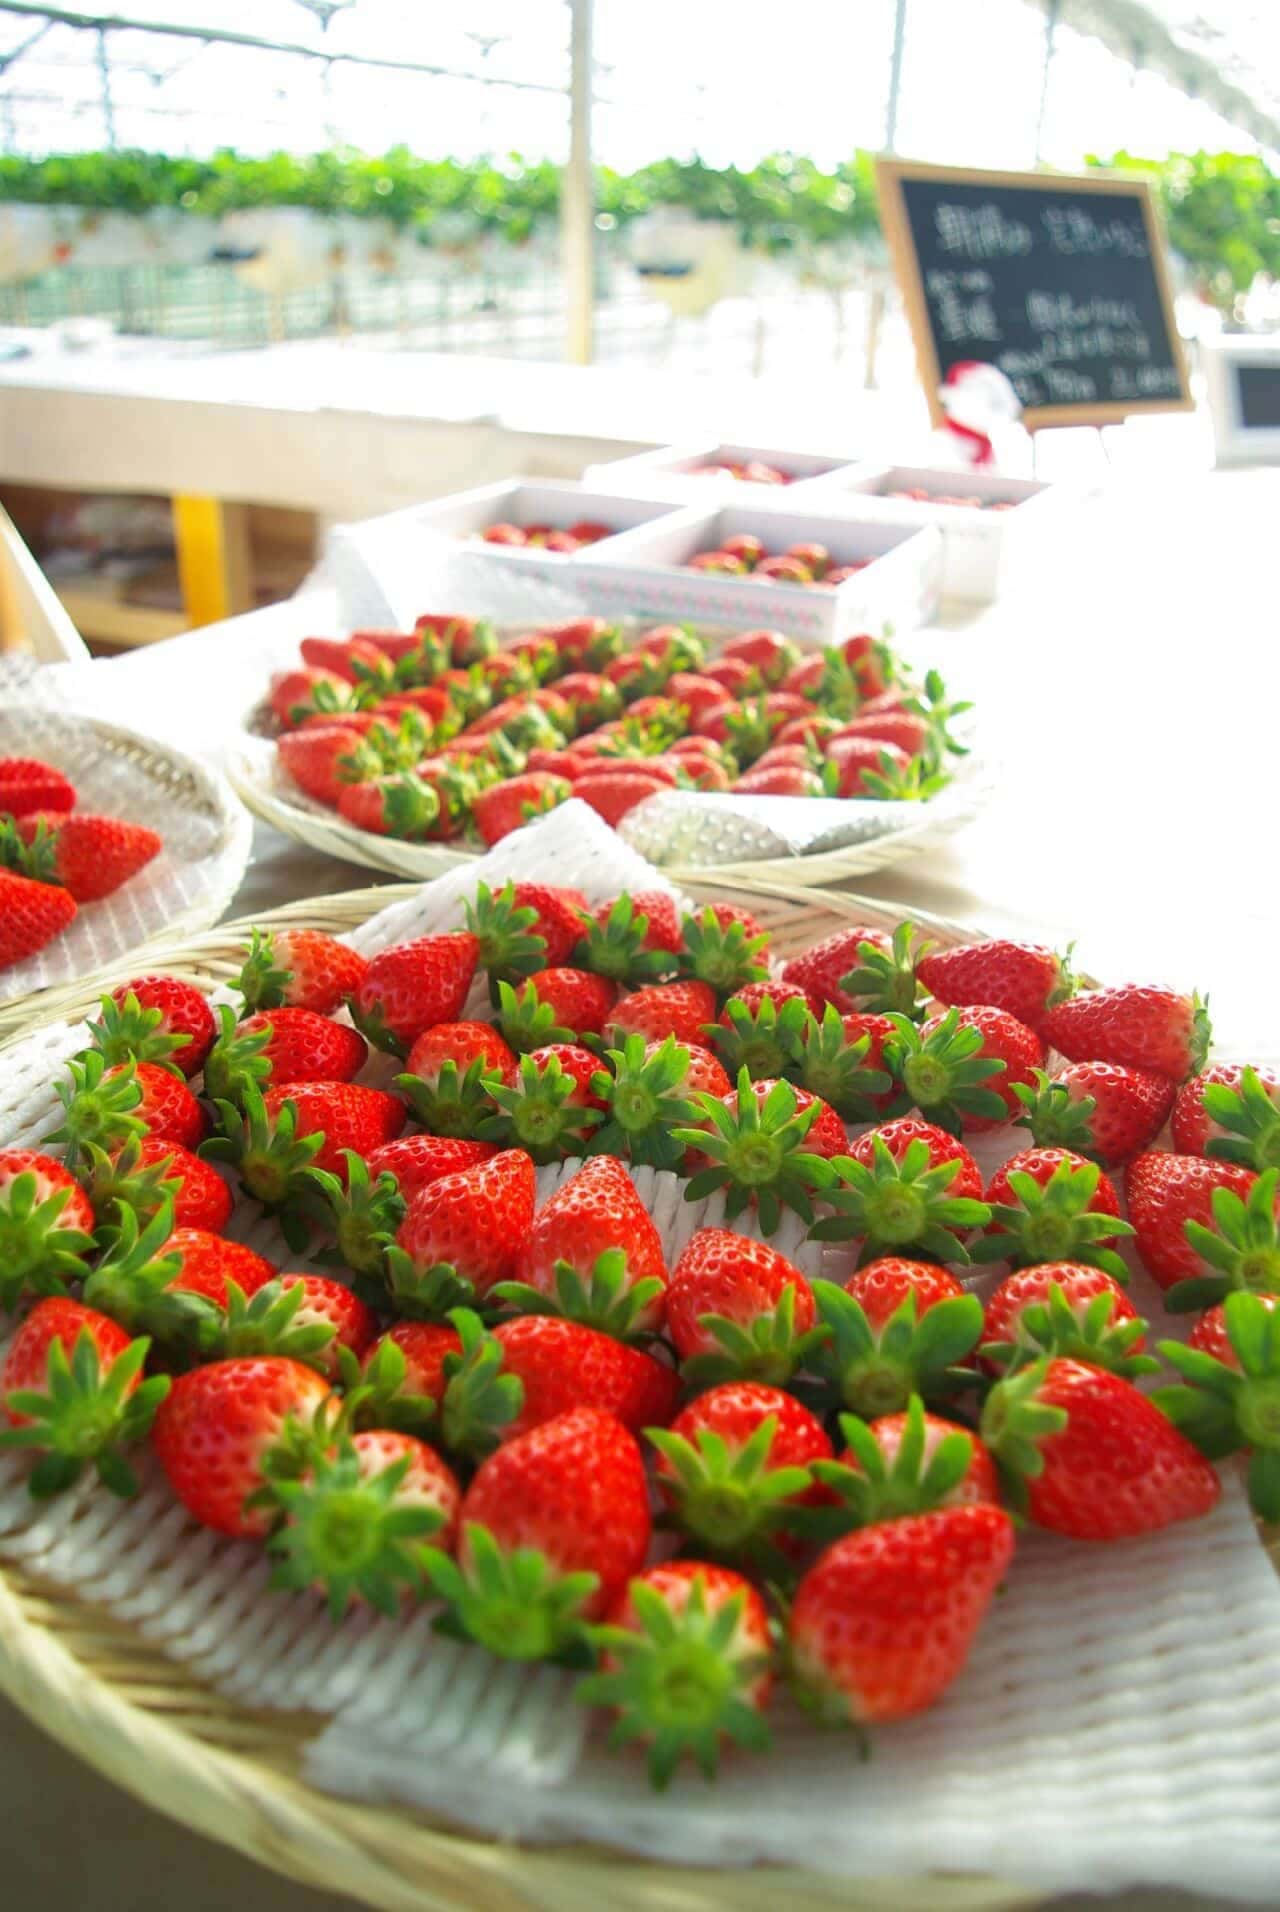 Strawberries from Tokorozawa Kitada Farm